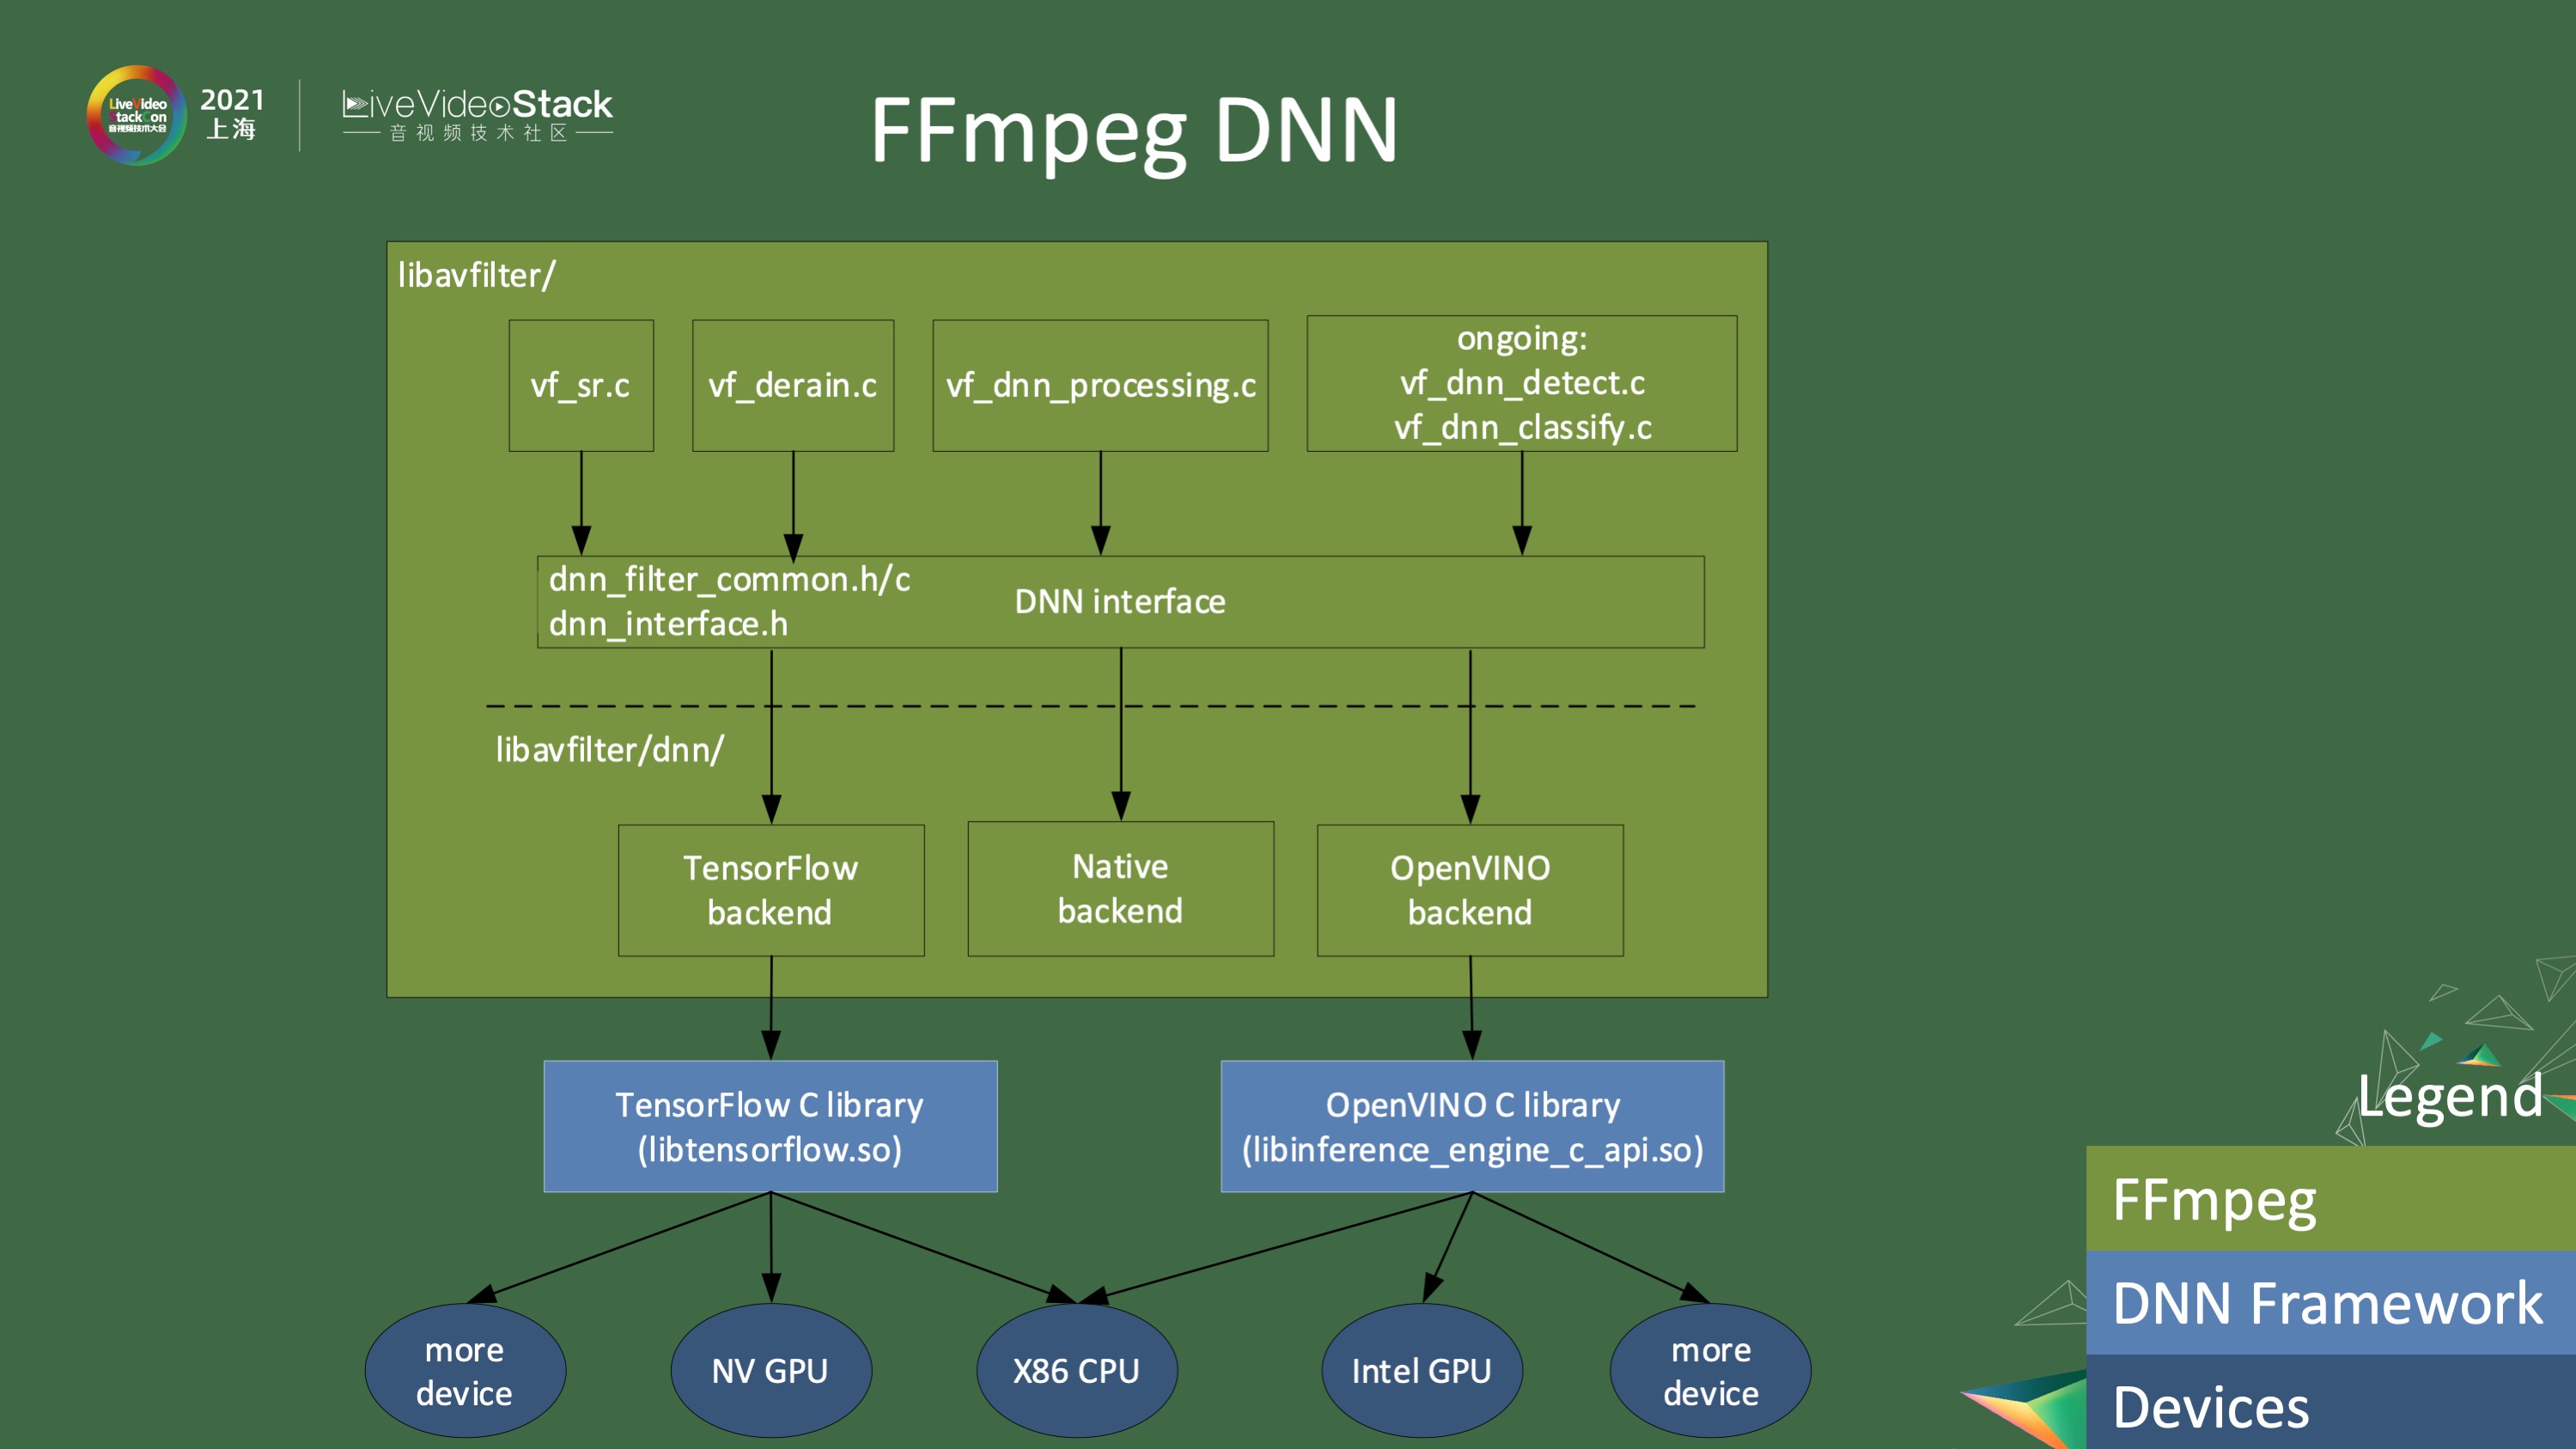 OneVPL与FFmpeg/GStreamer硬件编解码器